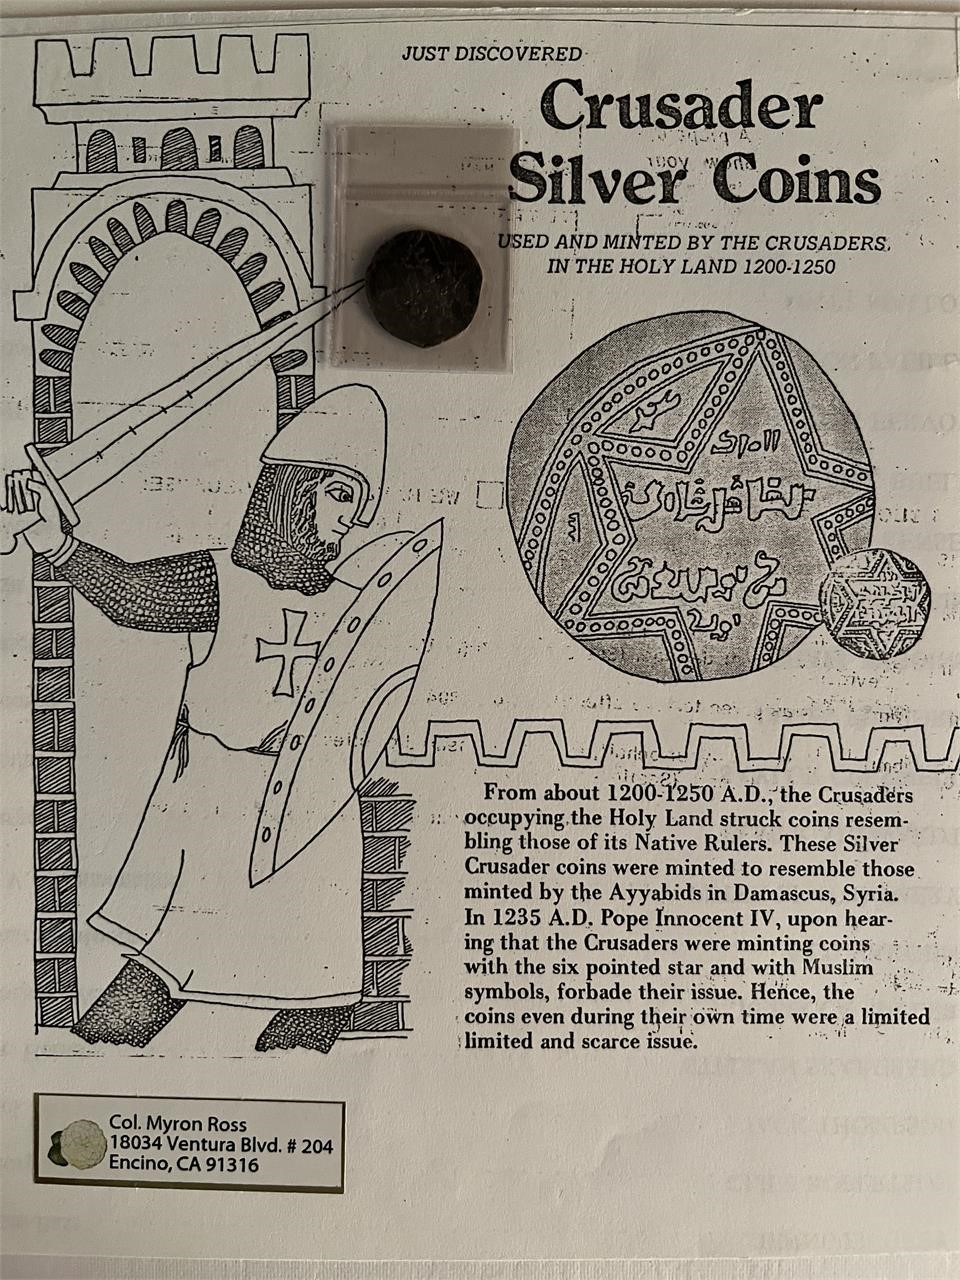 Crusader silver coin. 1 inch